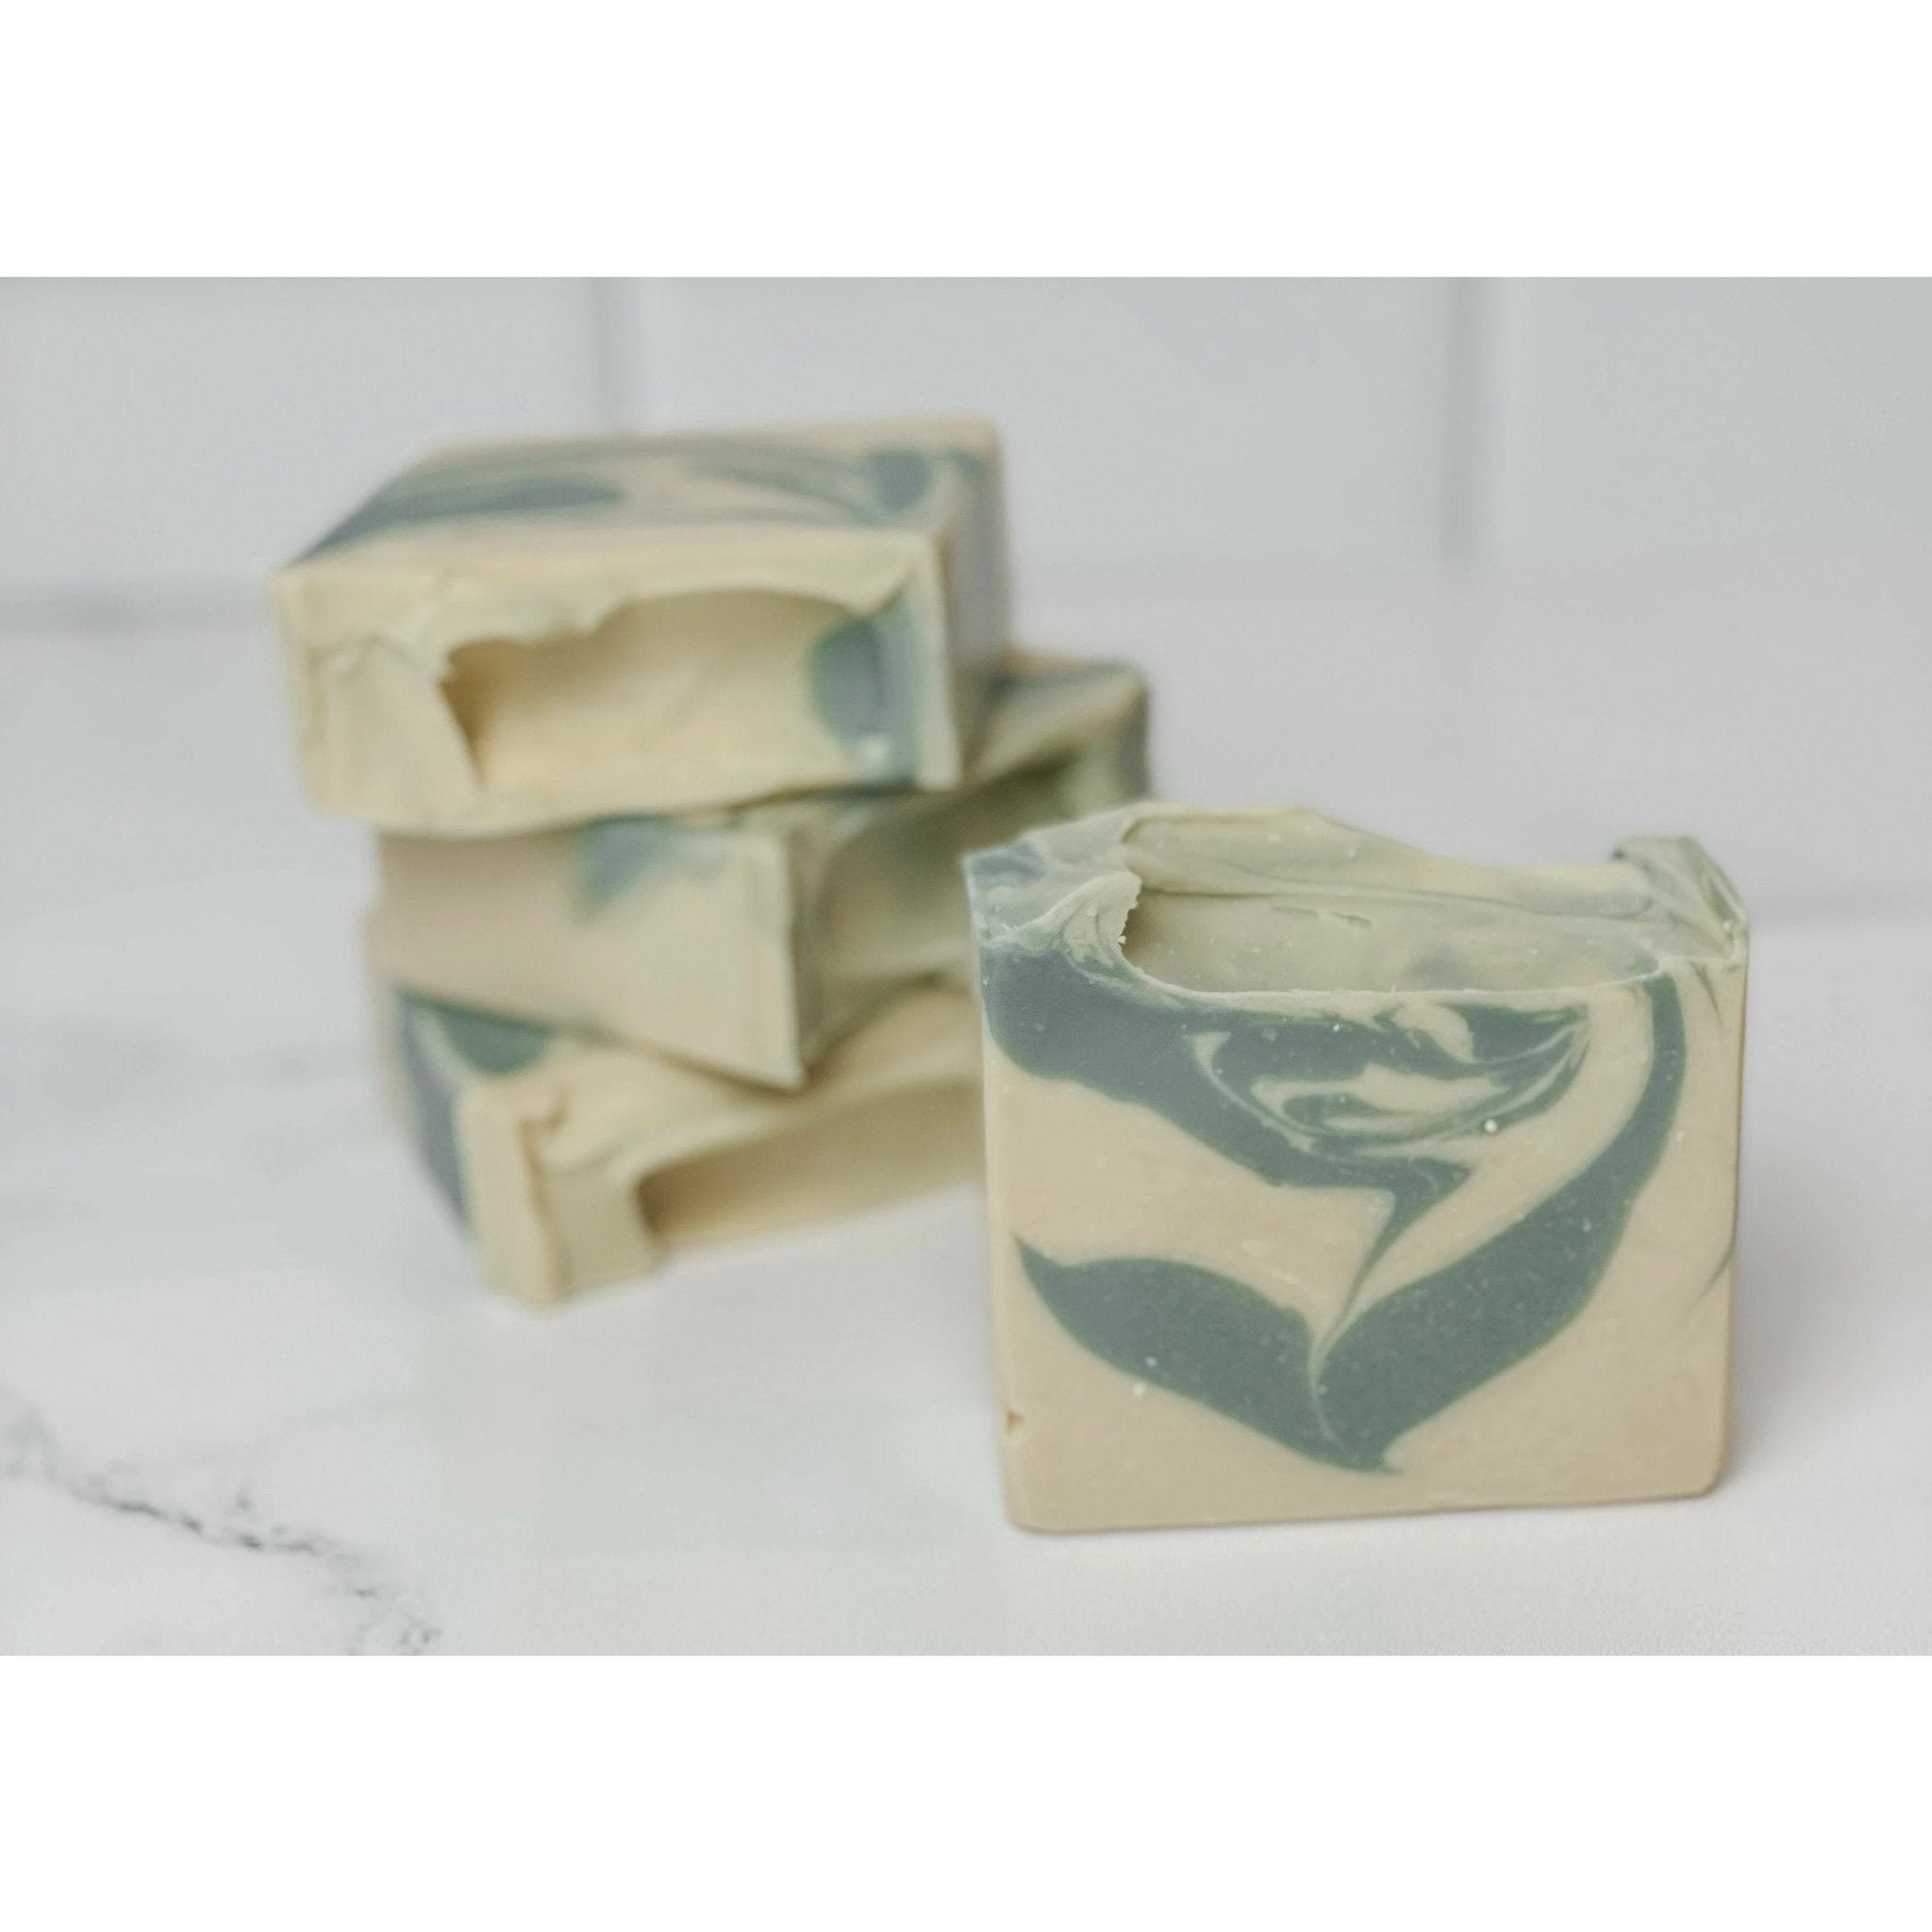 Winter Spruce | Handmade Soap | Goat Milk Soap - Celtic Clan Soapery LLC